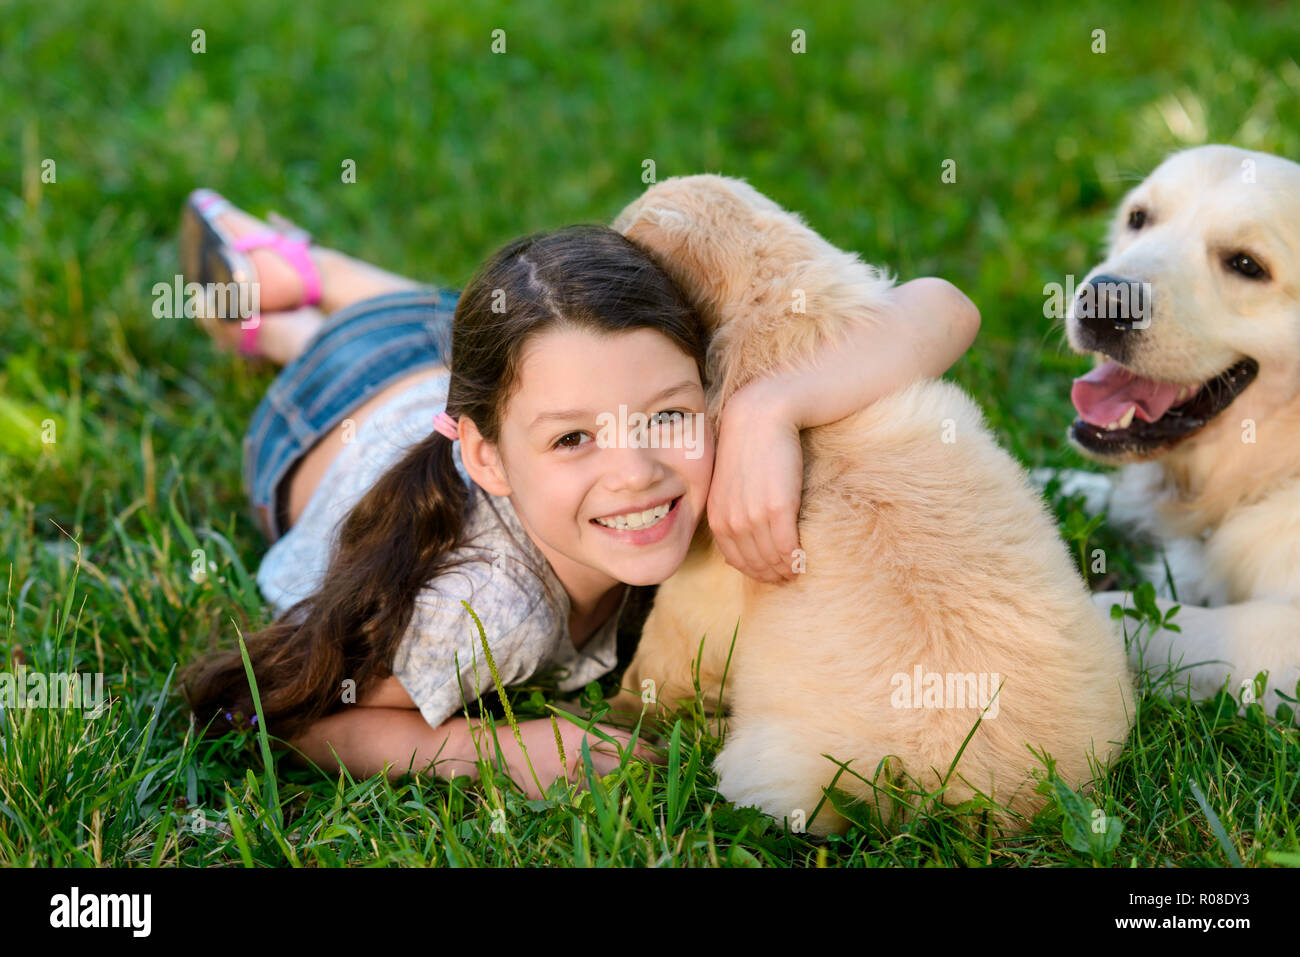 Sorridente bambino abbraccia un cucciolo Foto Stock